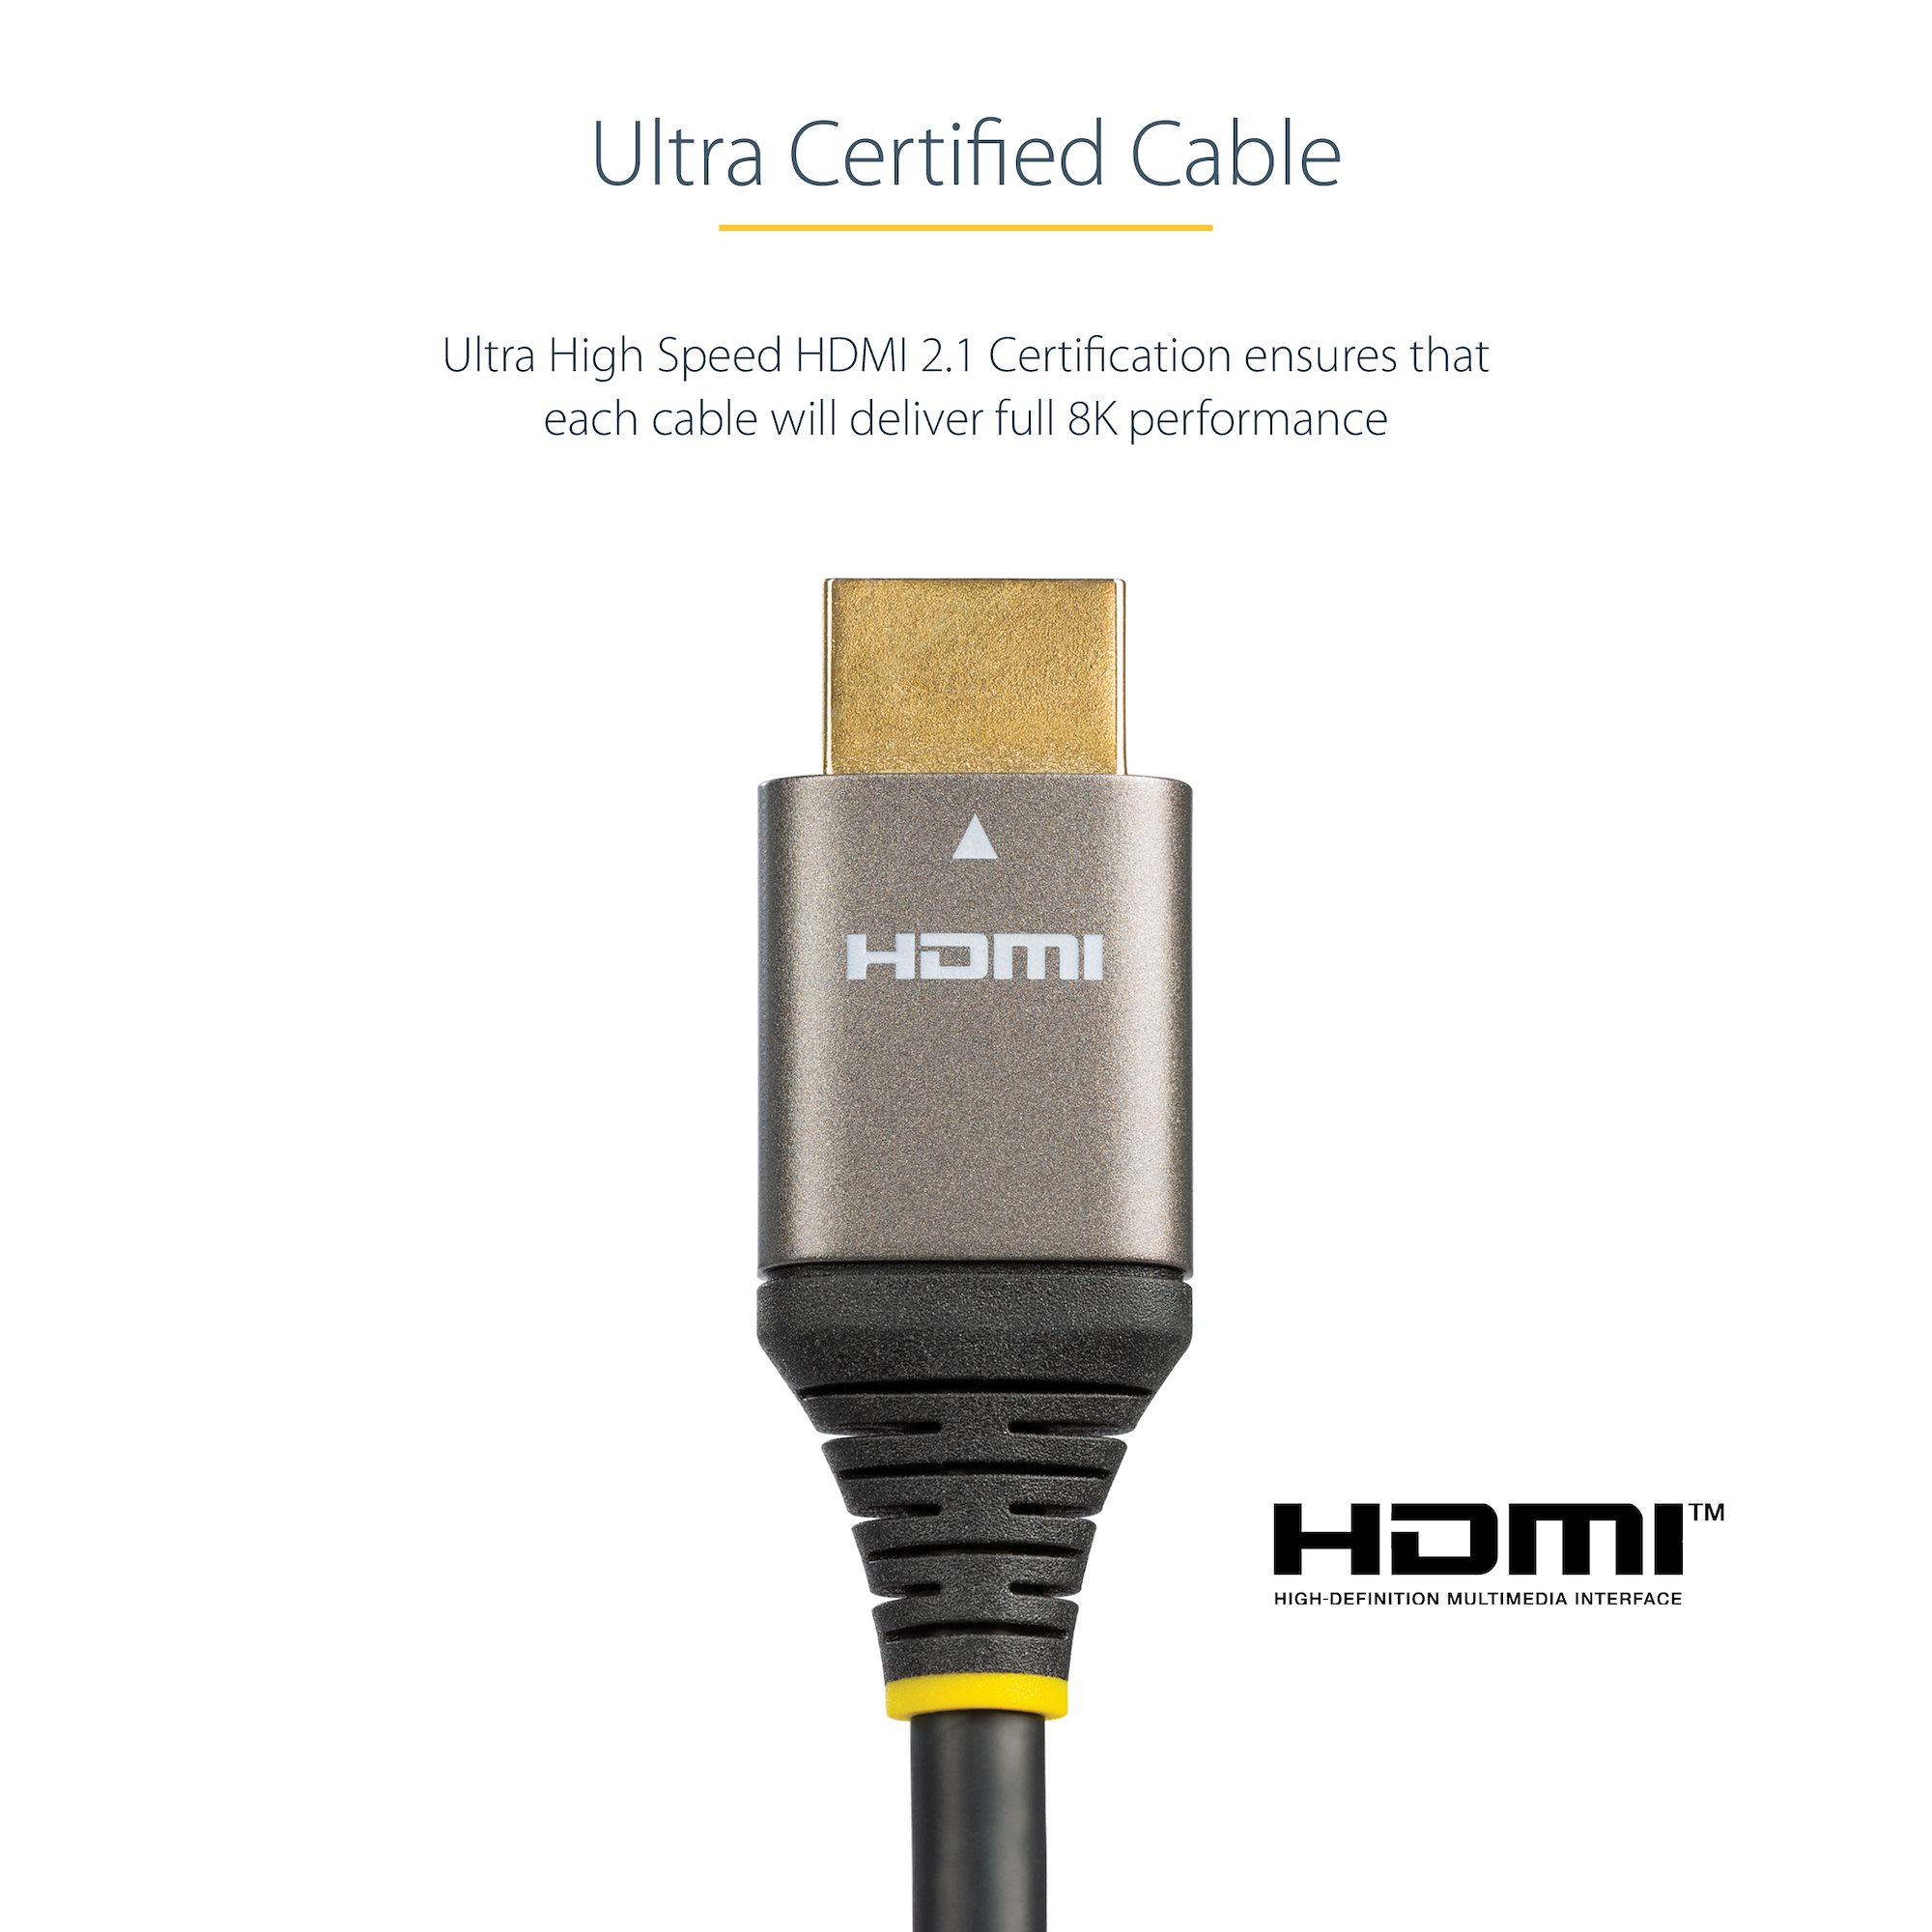 TiGHT AV. HDMI 2.0 PREMIUM HIGH SPEED INSTALLATION CABLE - 5M